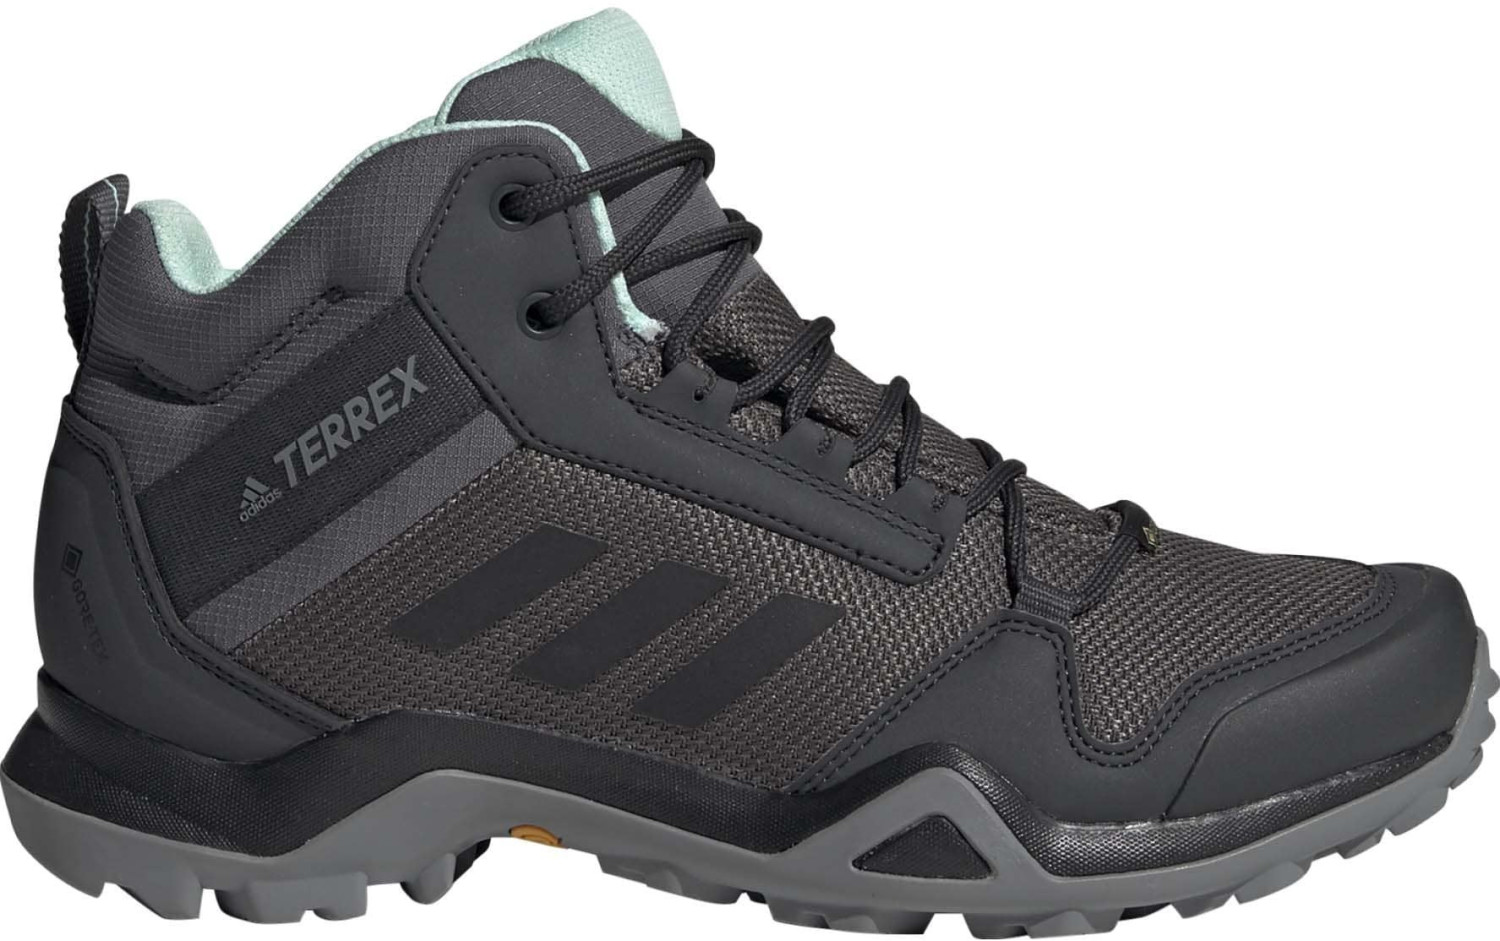 Adidas Terrex AX3 Mid GTX Women grey/core black/clear mint